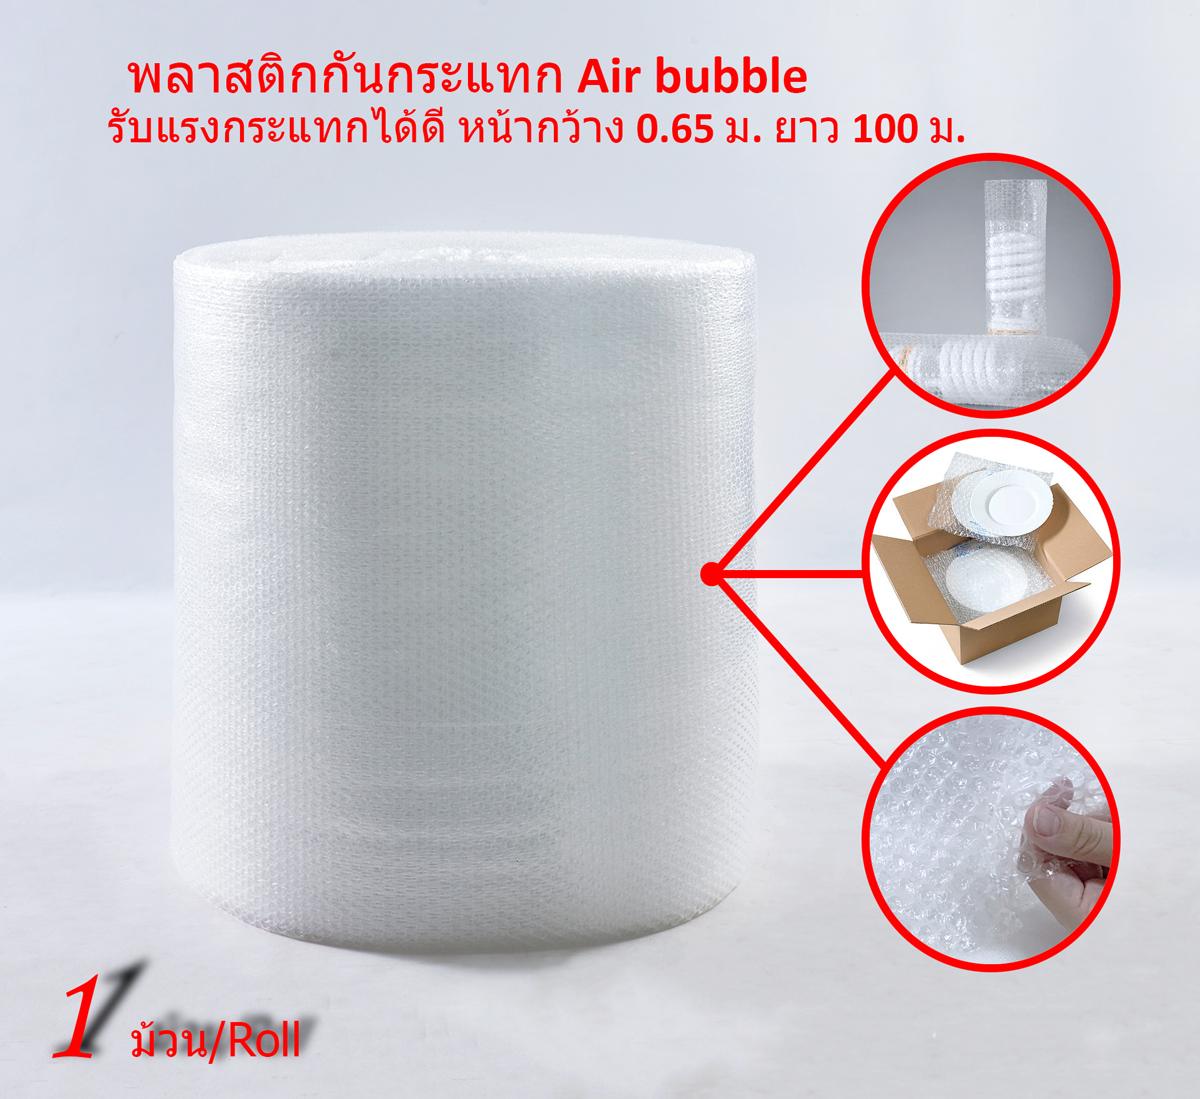 Air Bubble พลาสติกกันกระแทก หน้ากว้าง 65 ซม. ความยาว 100 เมตร Fresh Plastic Anti Germs Packing Wrap (Clear, Transparent) Best For Fragile and Other Items